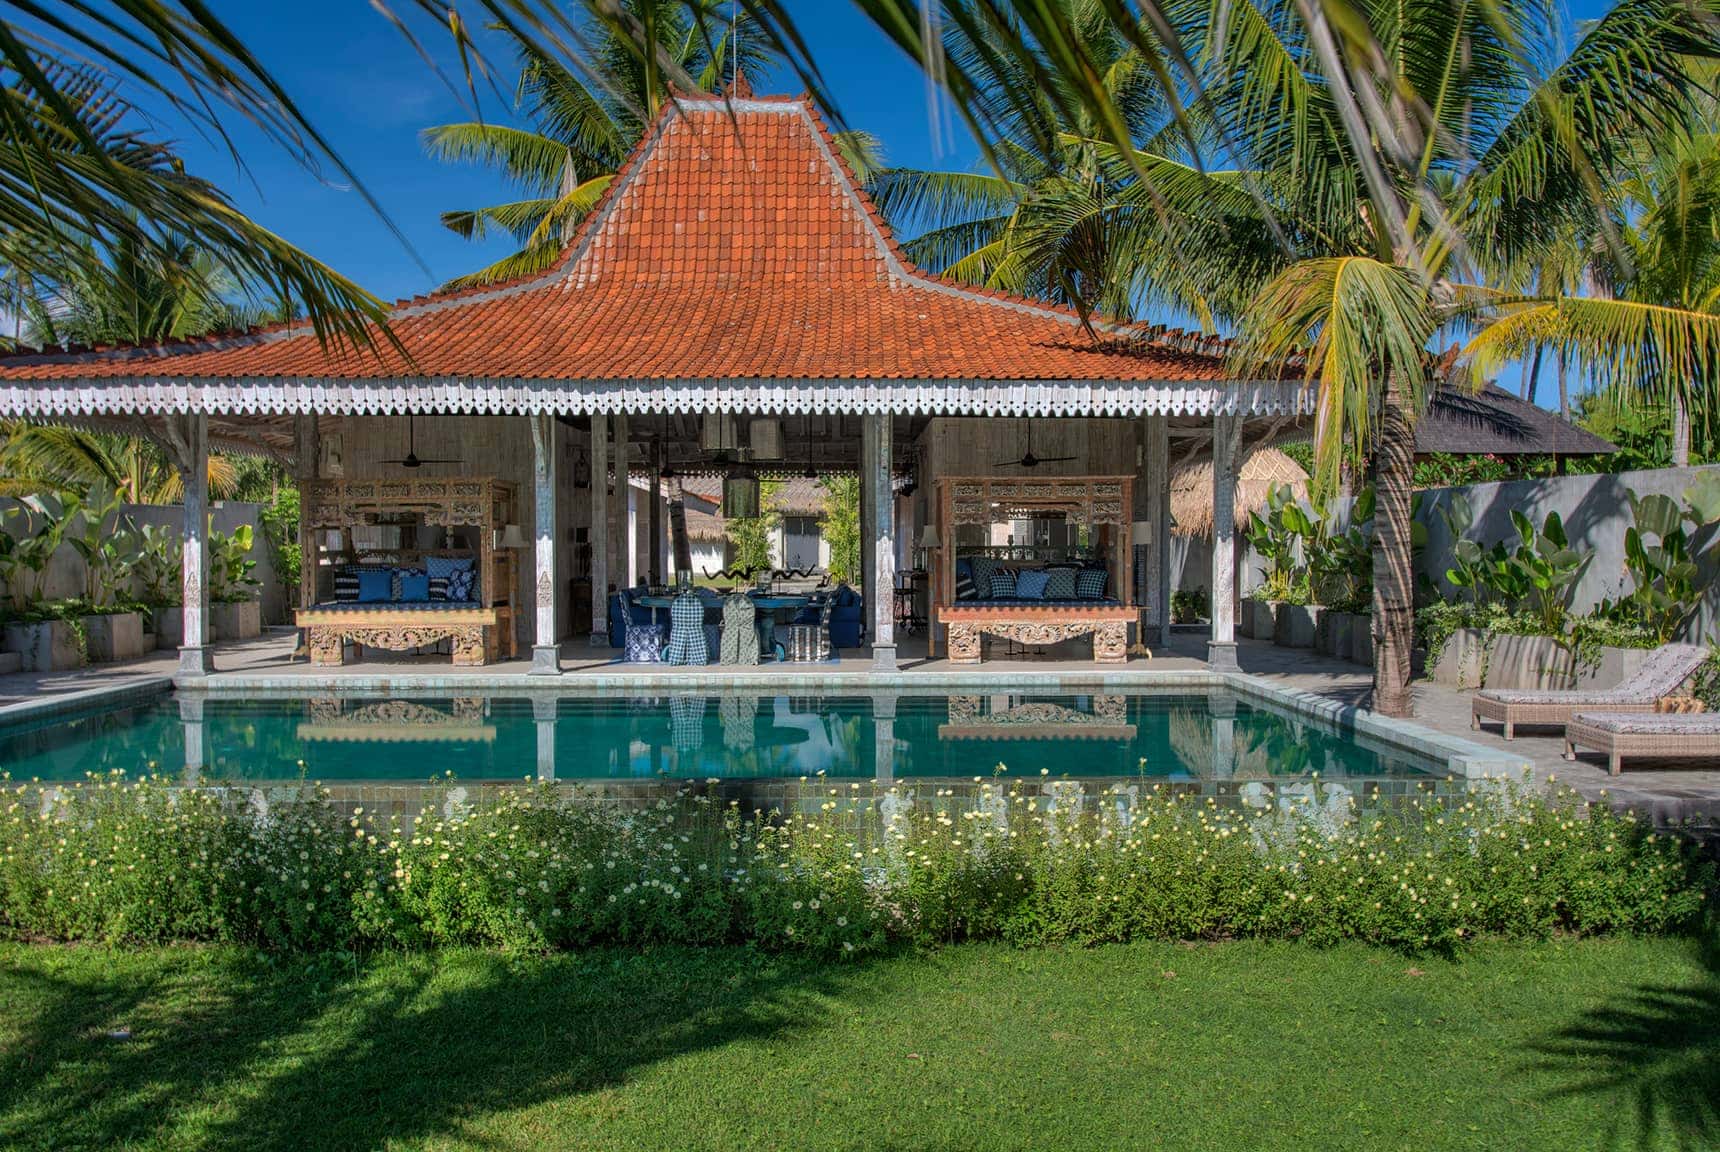 Joglo House - Pantai Sire, Lombok Indonesia (Bali villa photography by master photographer Rick Carmichael of LuxViz)